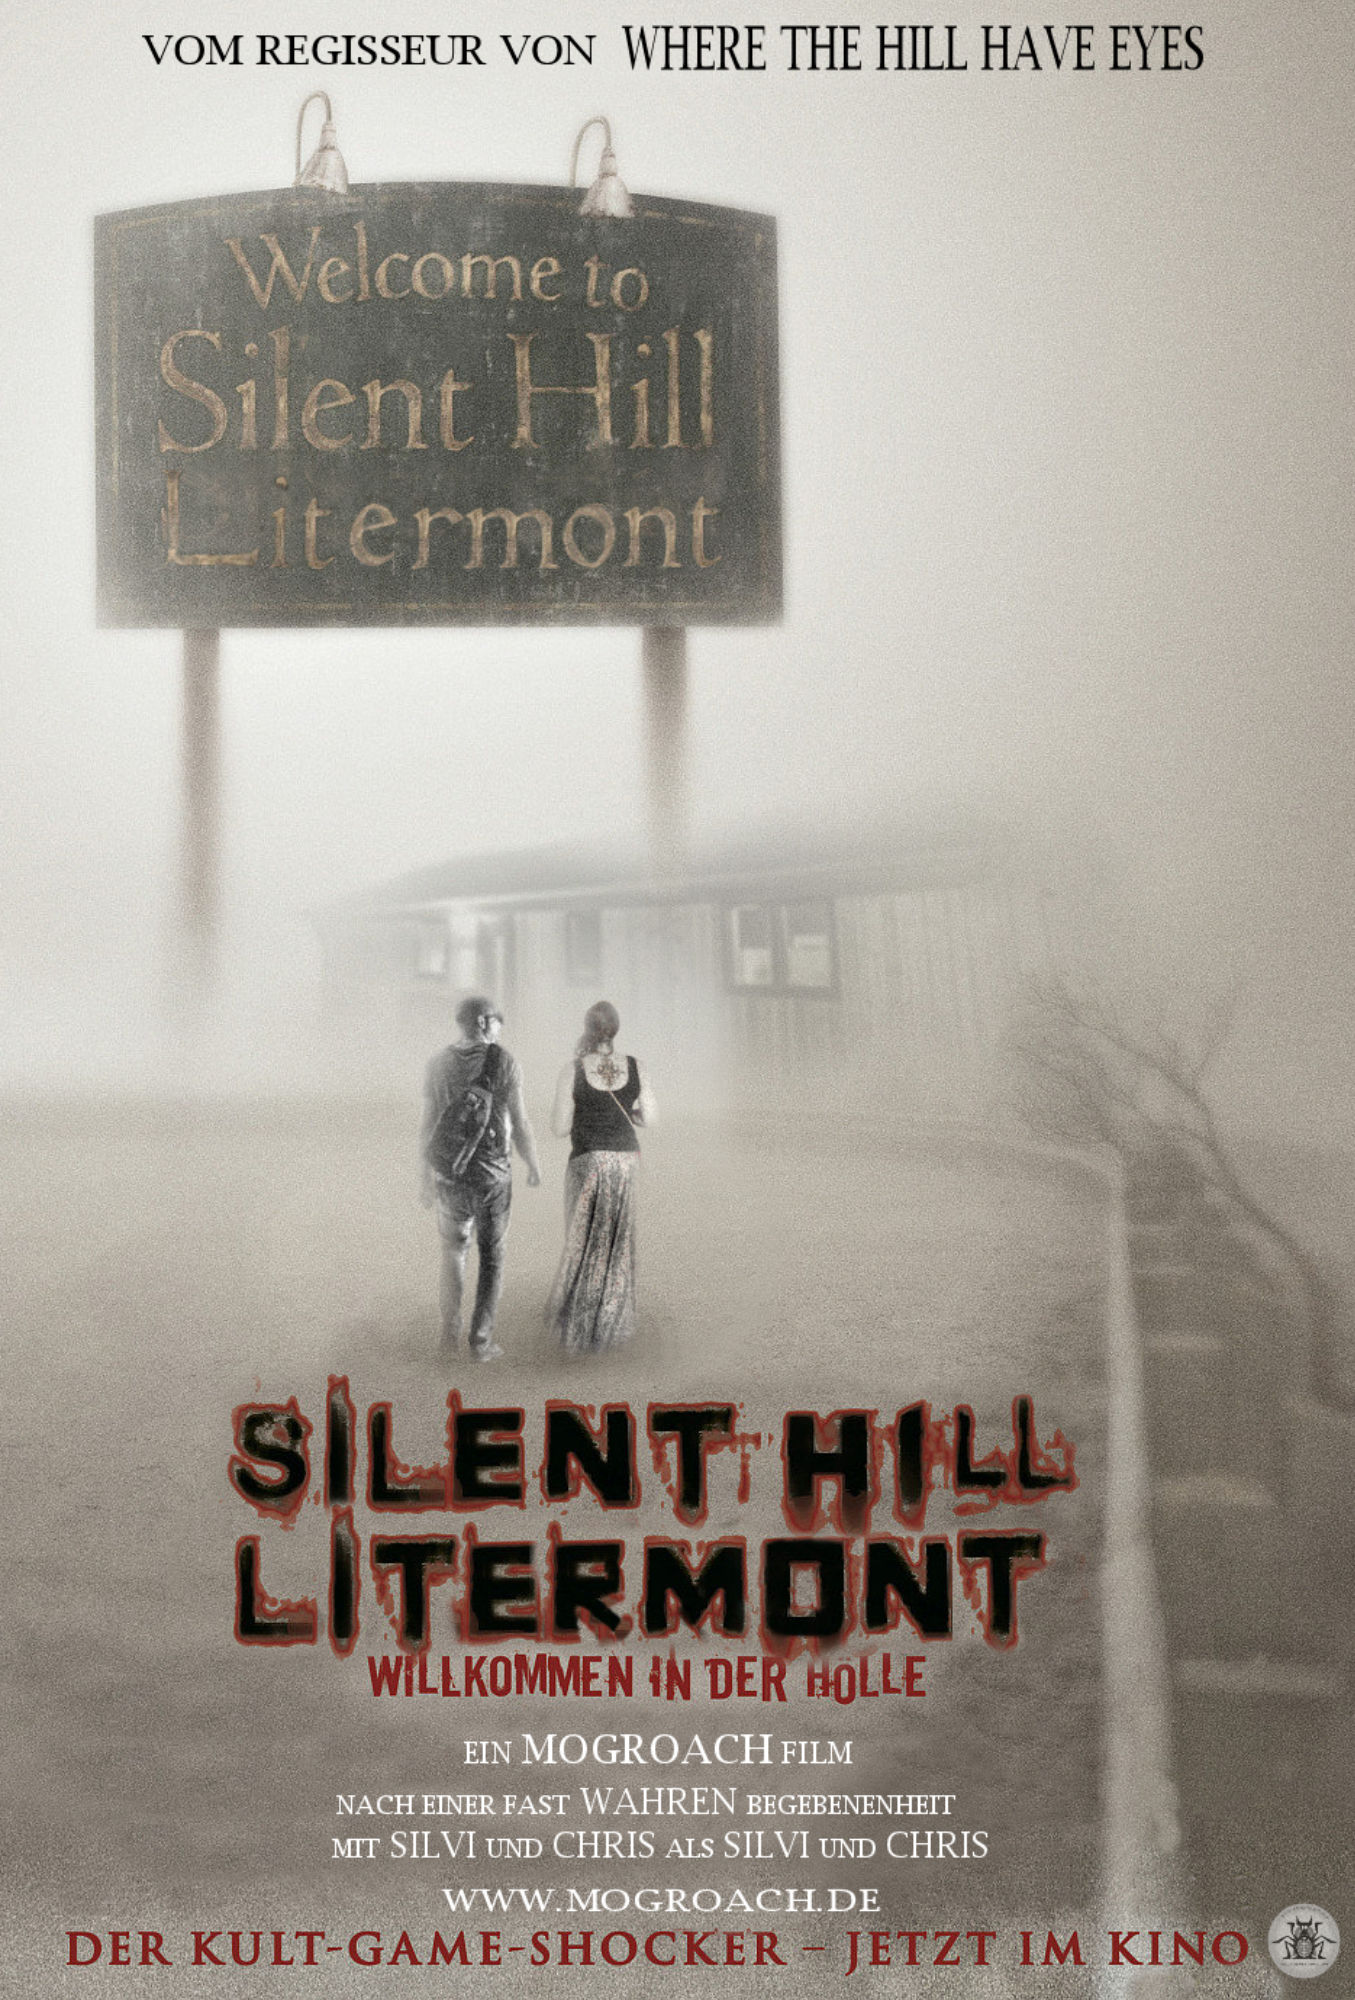 Silent Hill Litermont Mogroach Tiny Haus Wohngebiet